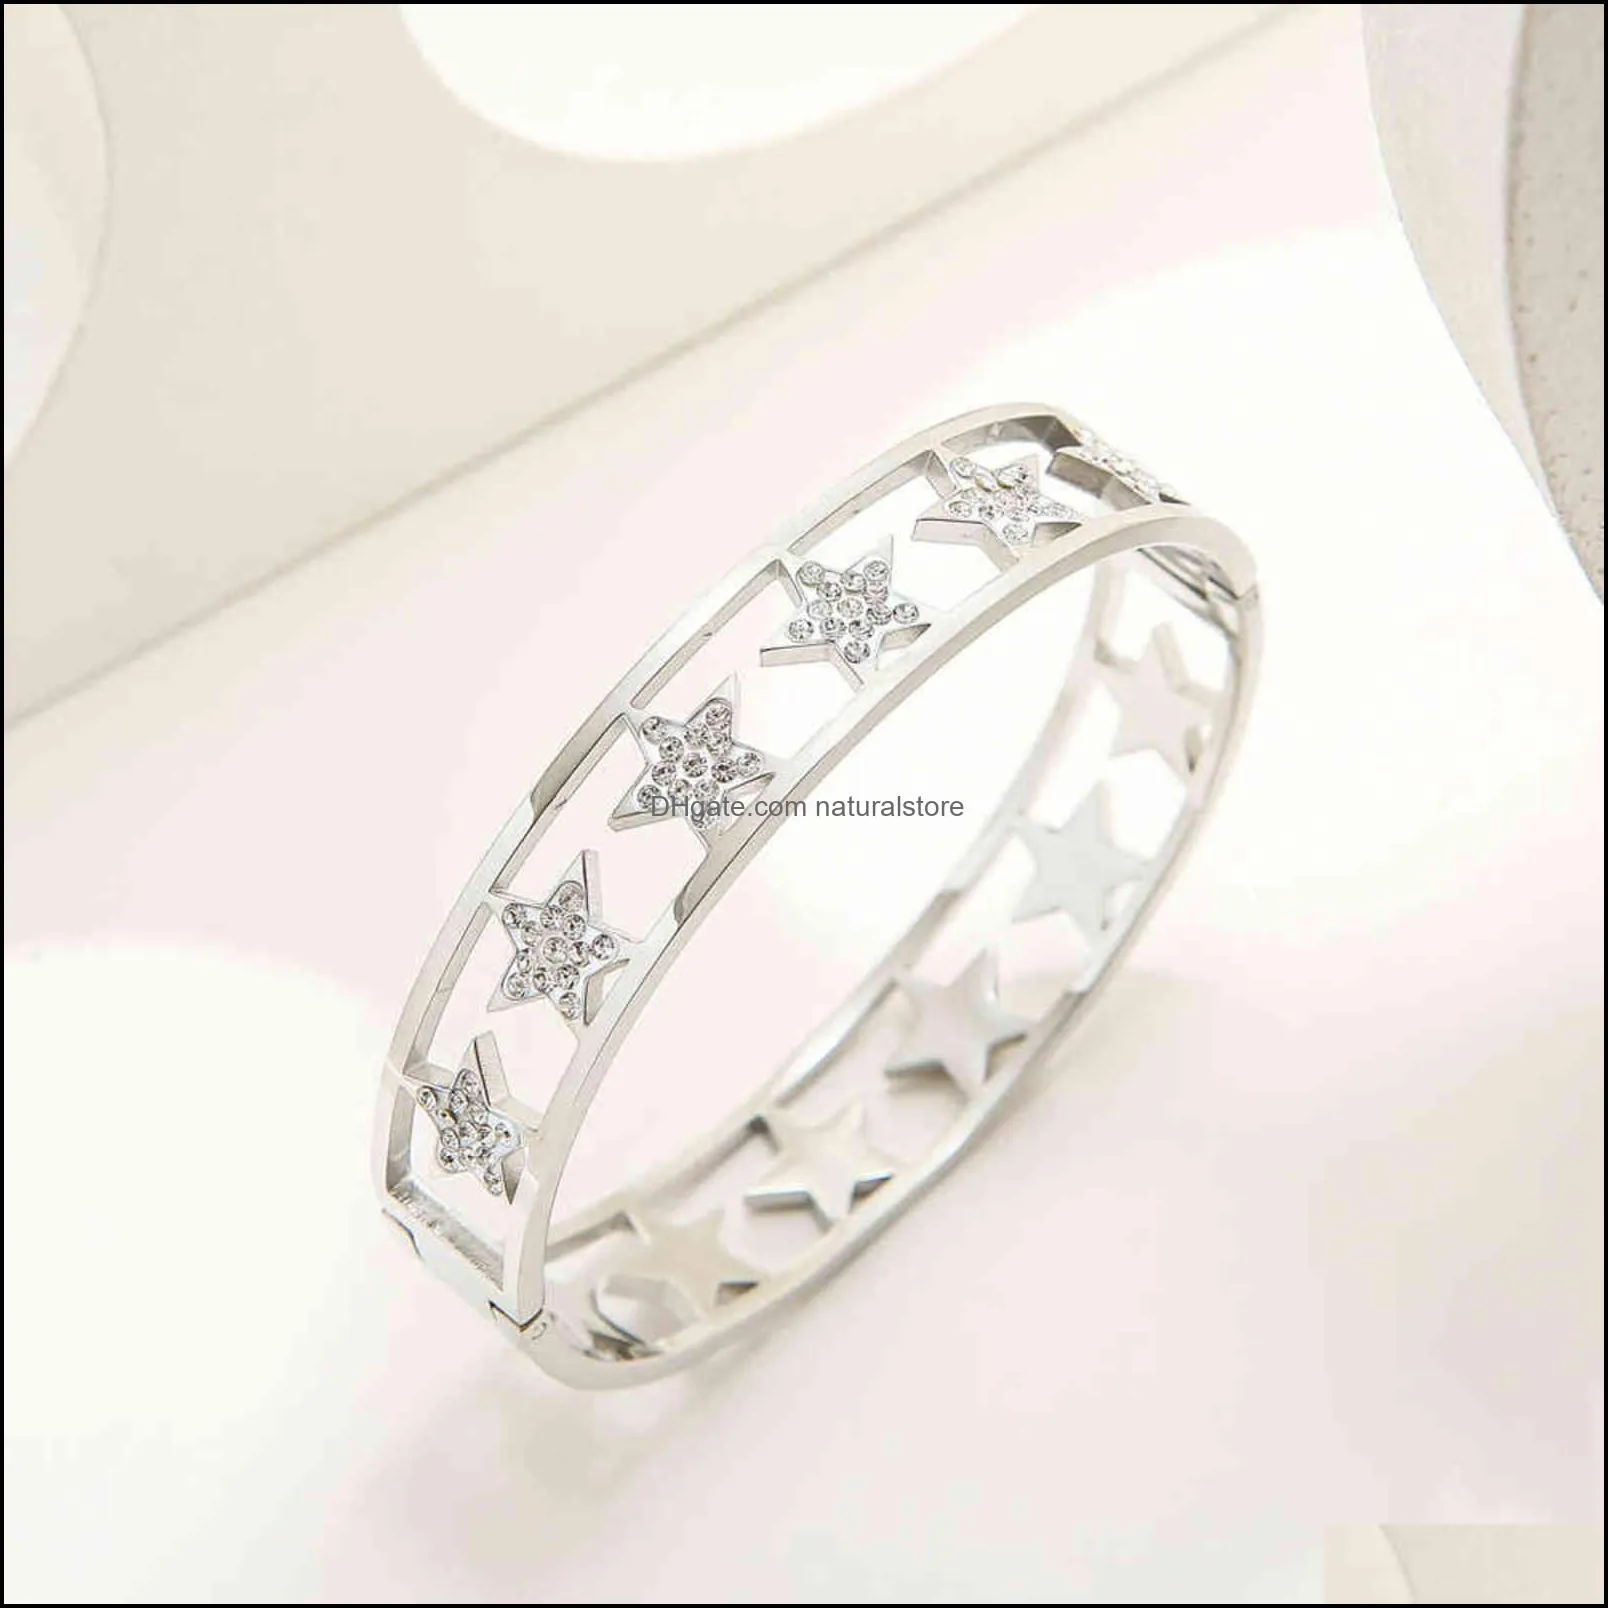 stainless steel bangles bracelet on hand for women gift jewelry rhinestone stars charm luxury hard 2021 new design